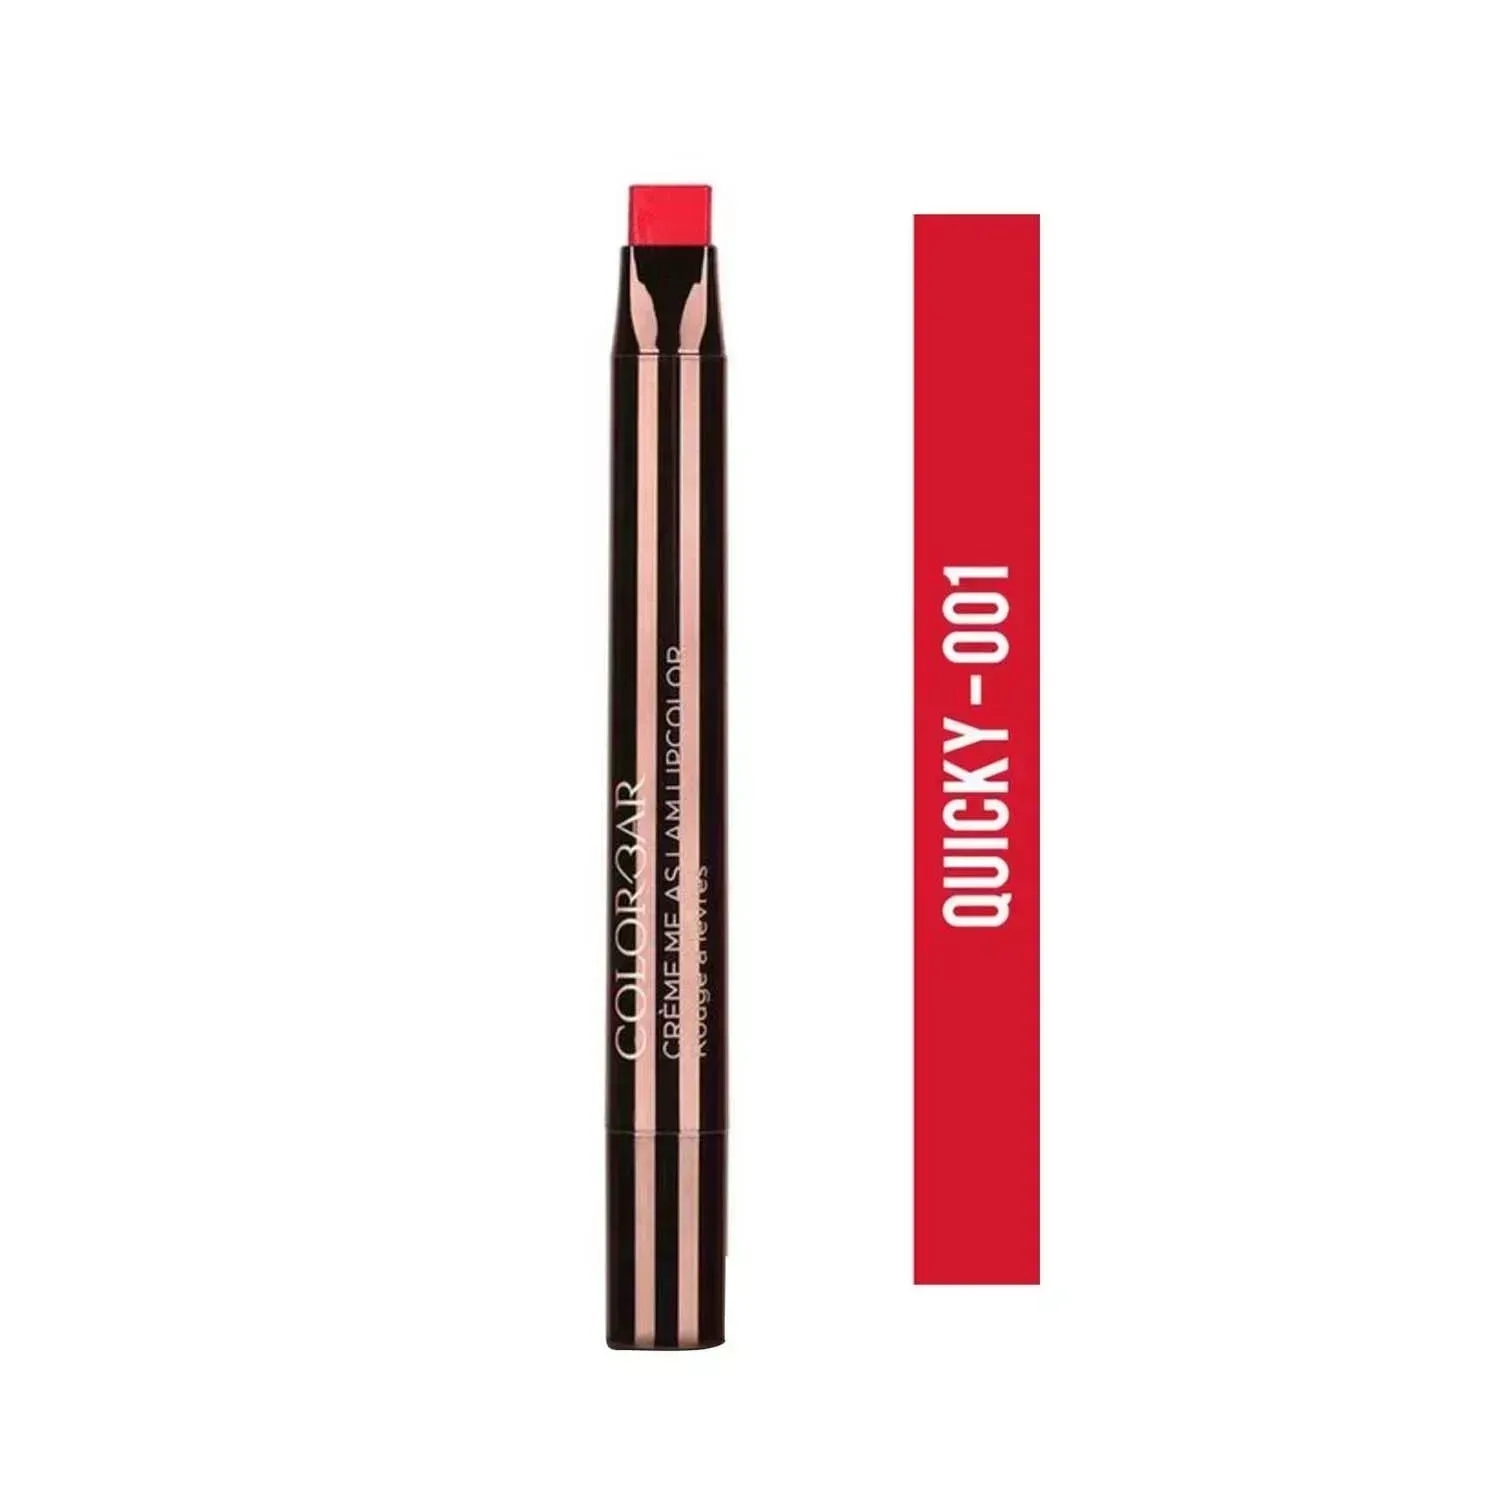 Colorbar | Colorbar Creme Me As I Am Lipstick - 001 Quicky (0.8g)